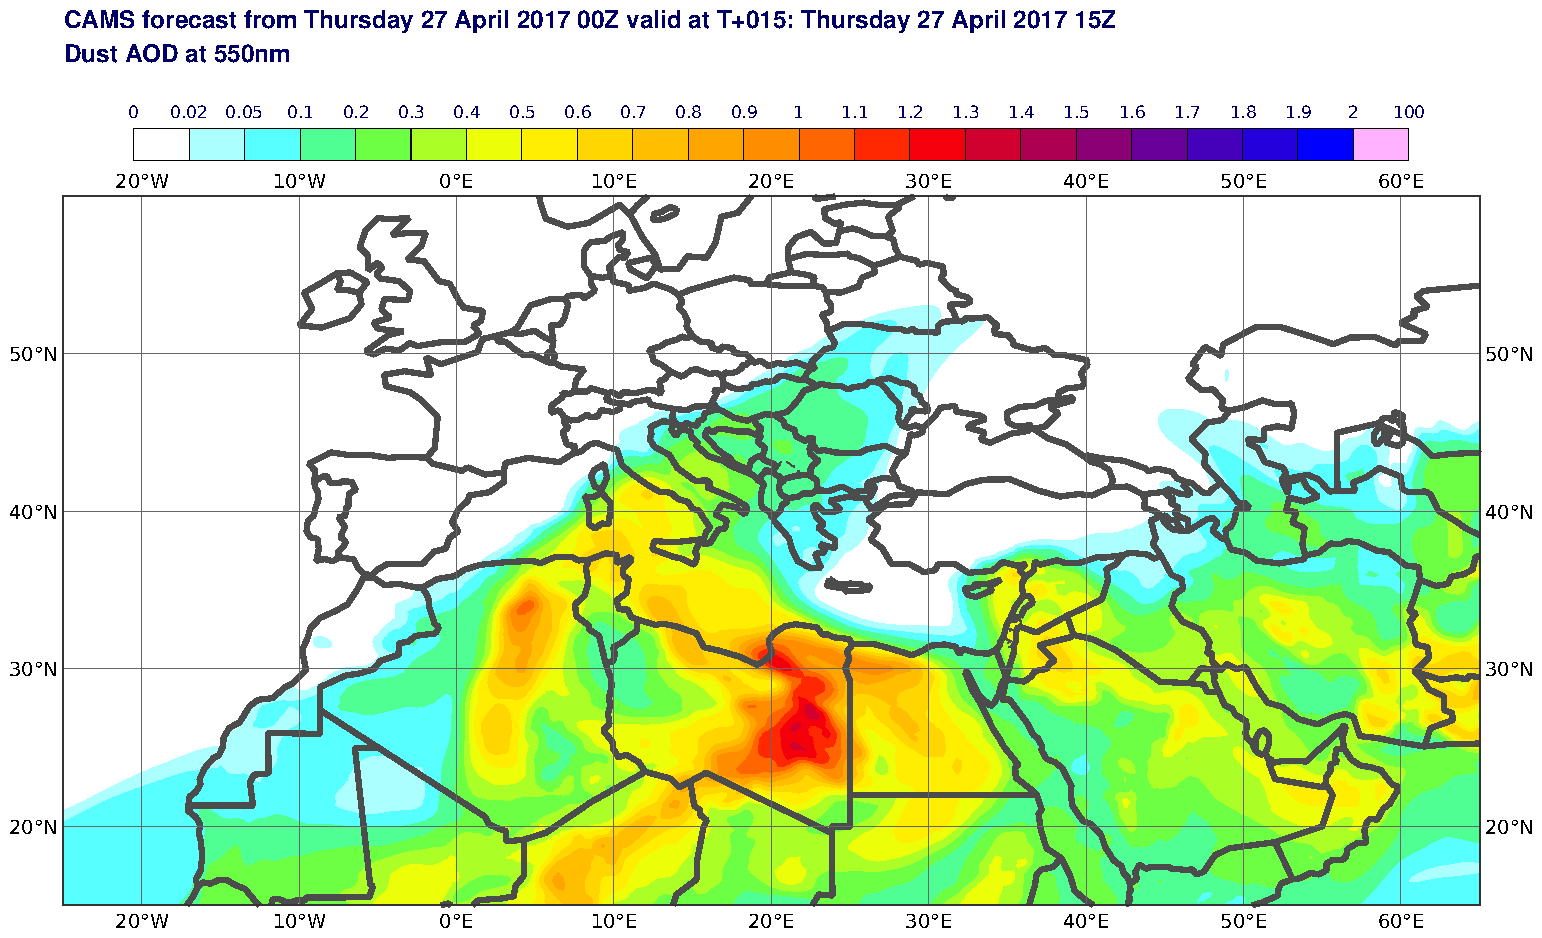 Dust AOD at 550nm valid at T15 - 2017-04-27 15:00